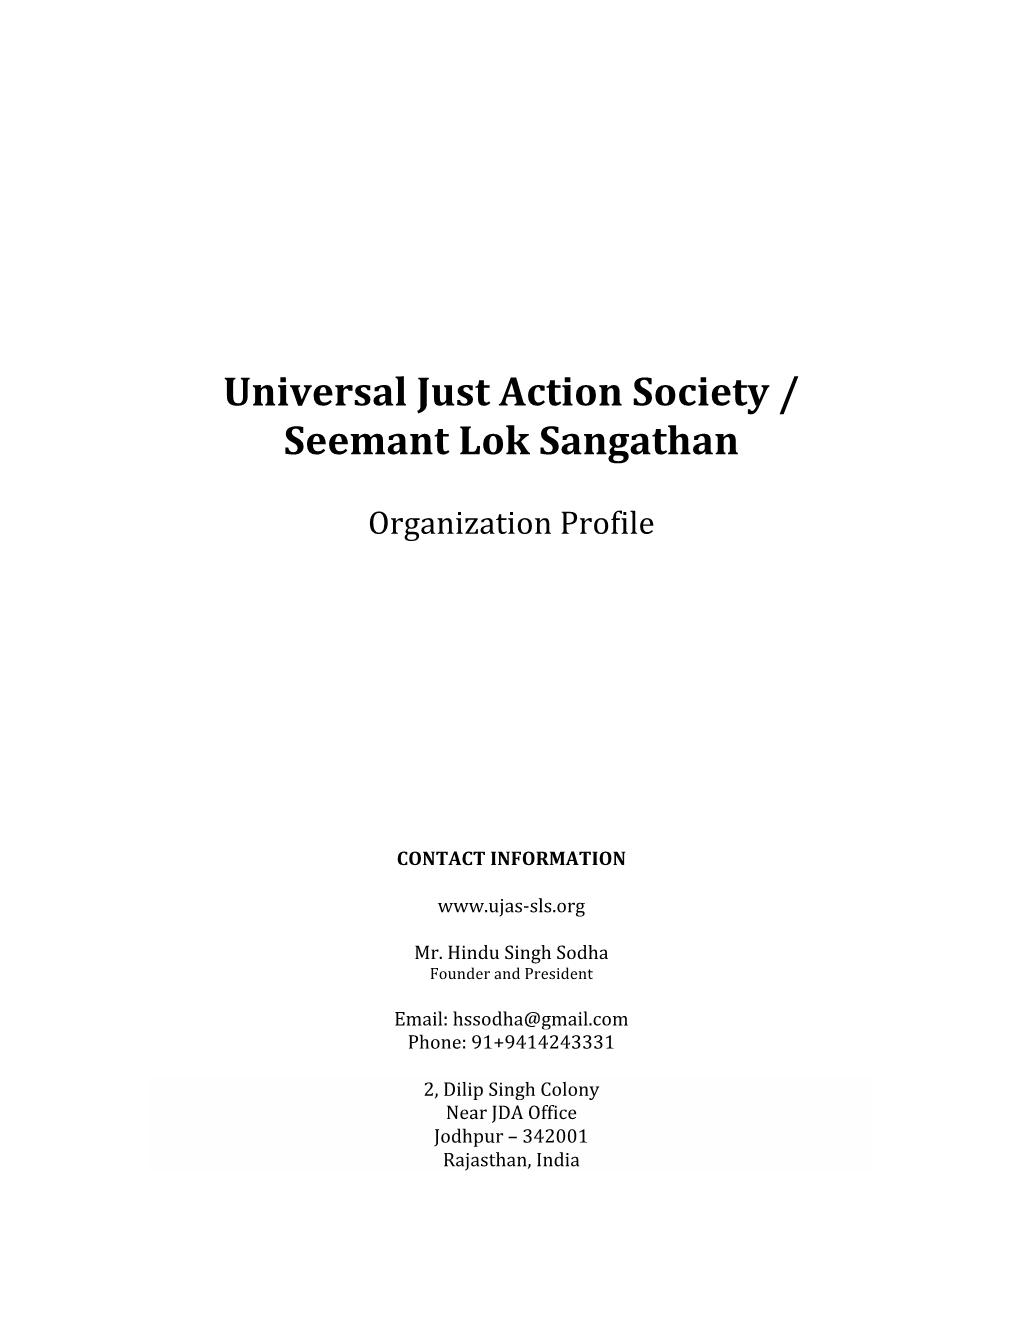 UJAS-SLS Organization Profile